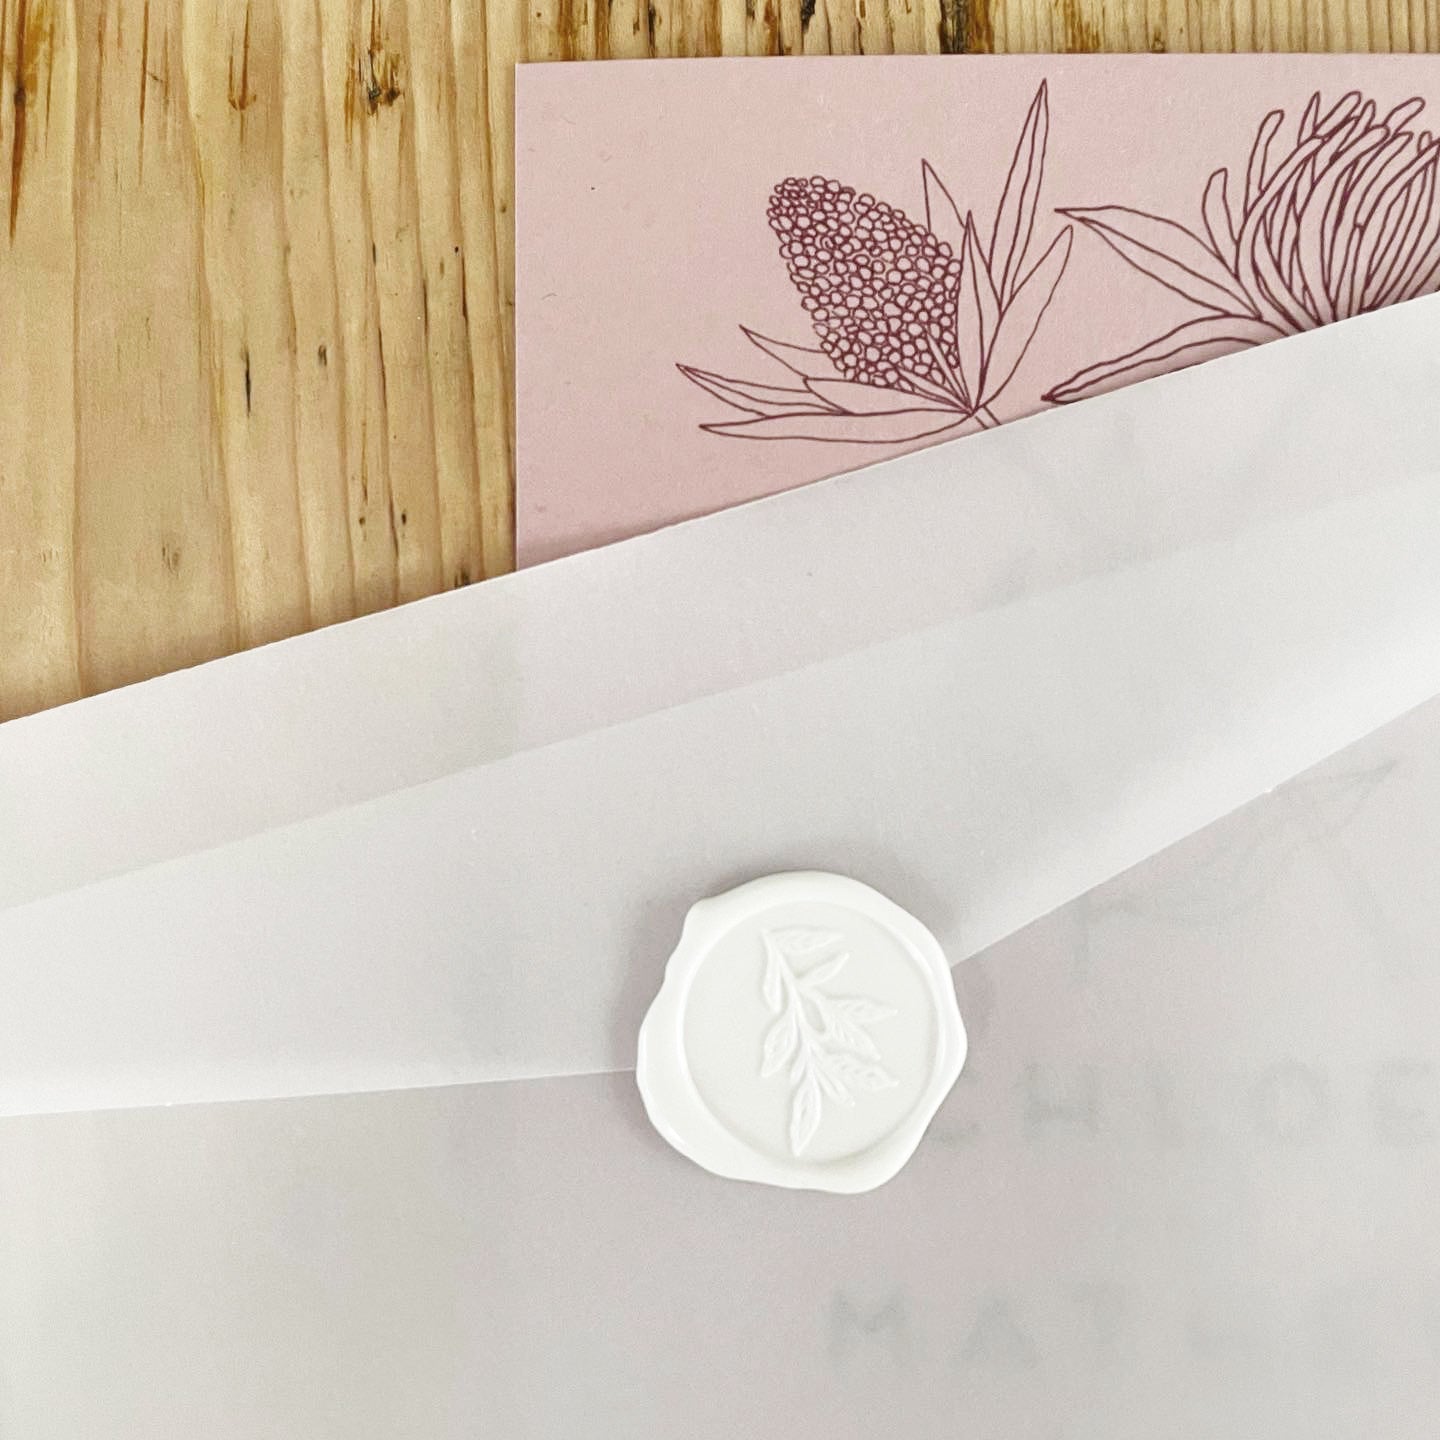 vellum envelope, translucent envelope, see through envelope